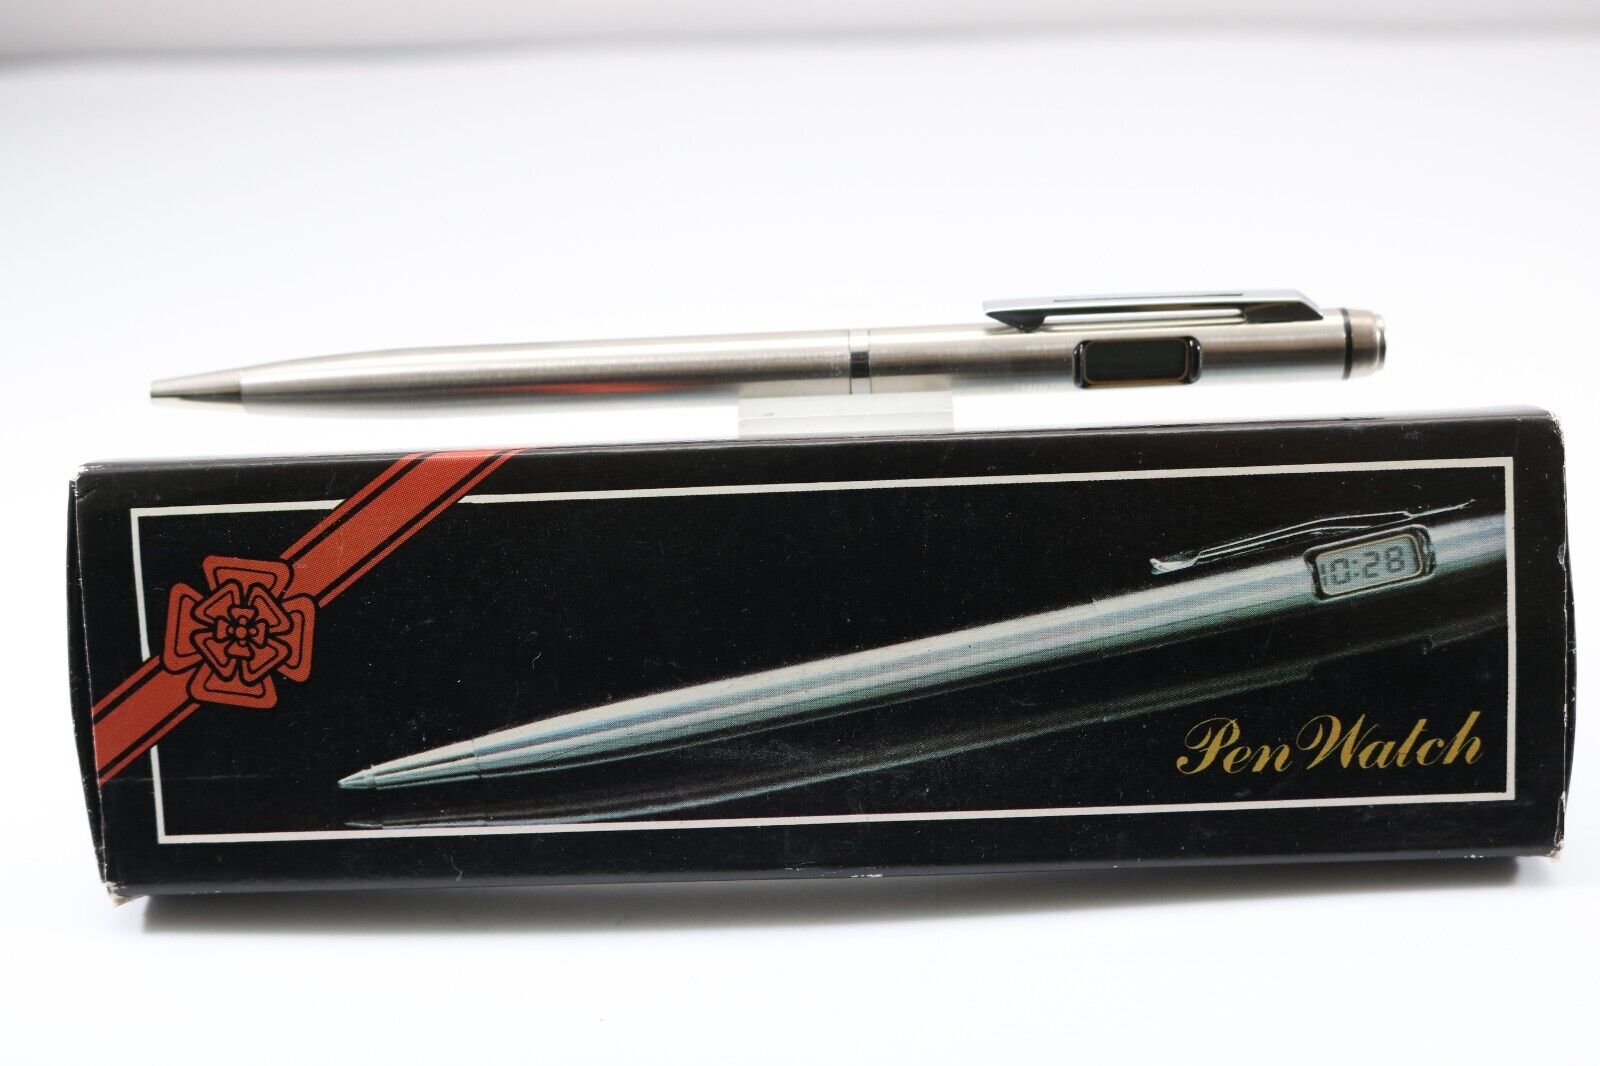 Vintage Brushed Steel Pen Watch (Original Case)